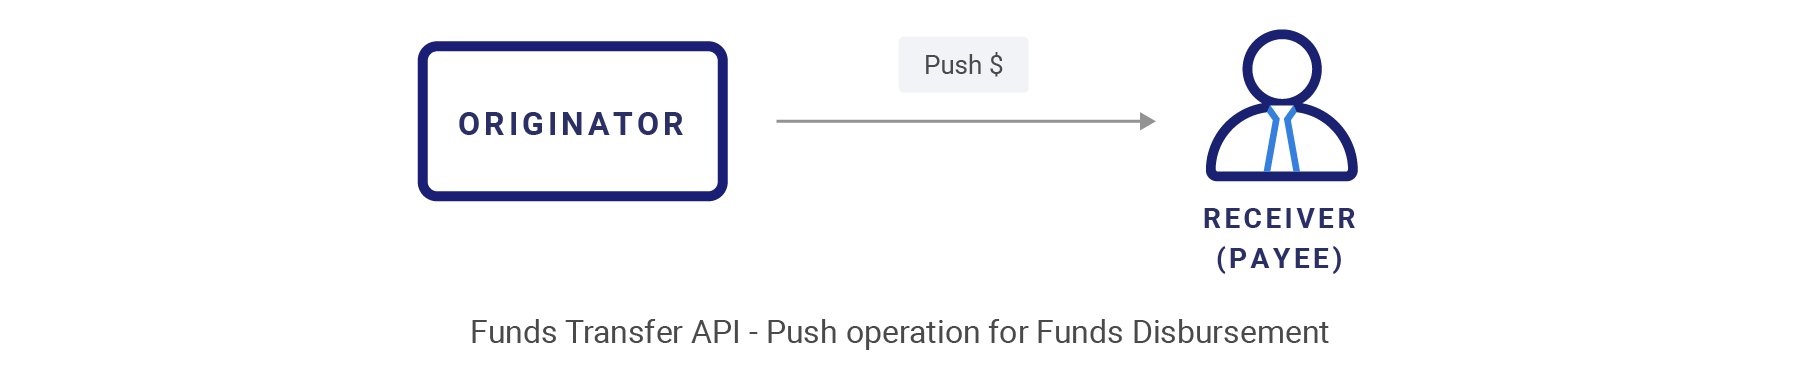 Funds transfer API push operations diagram